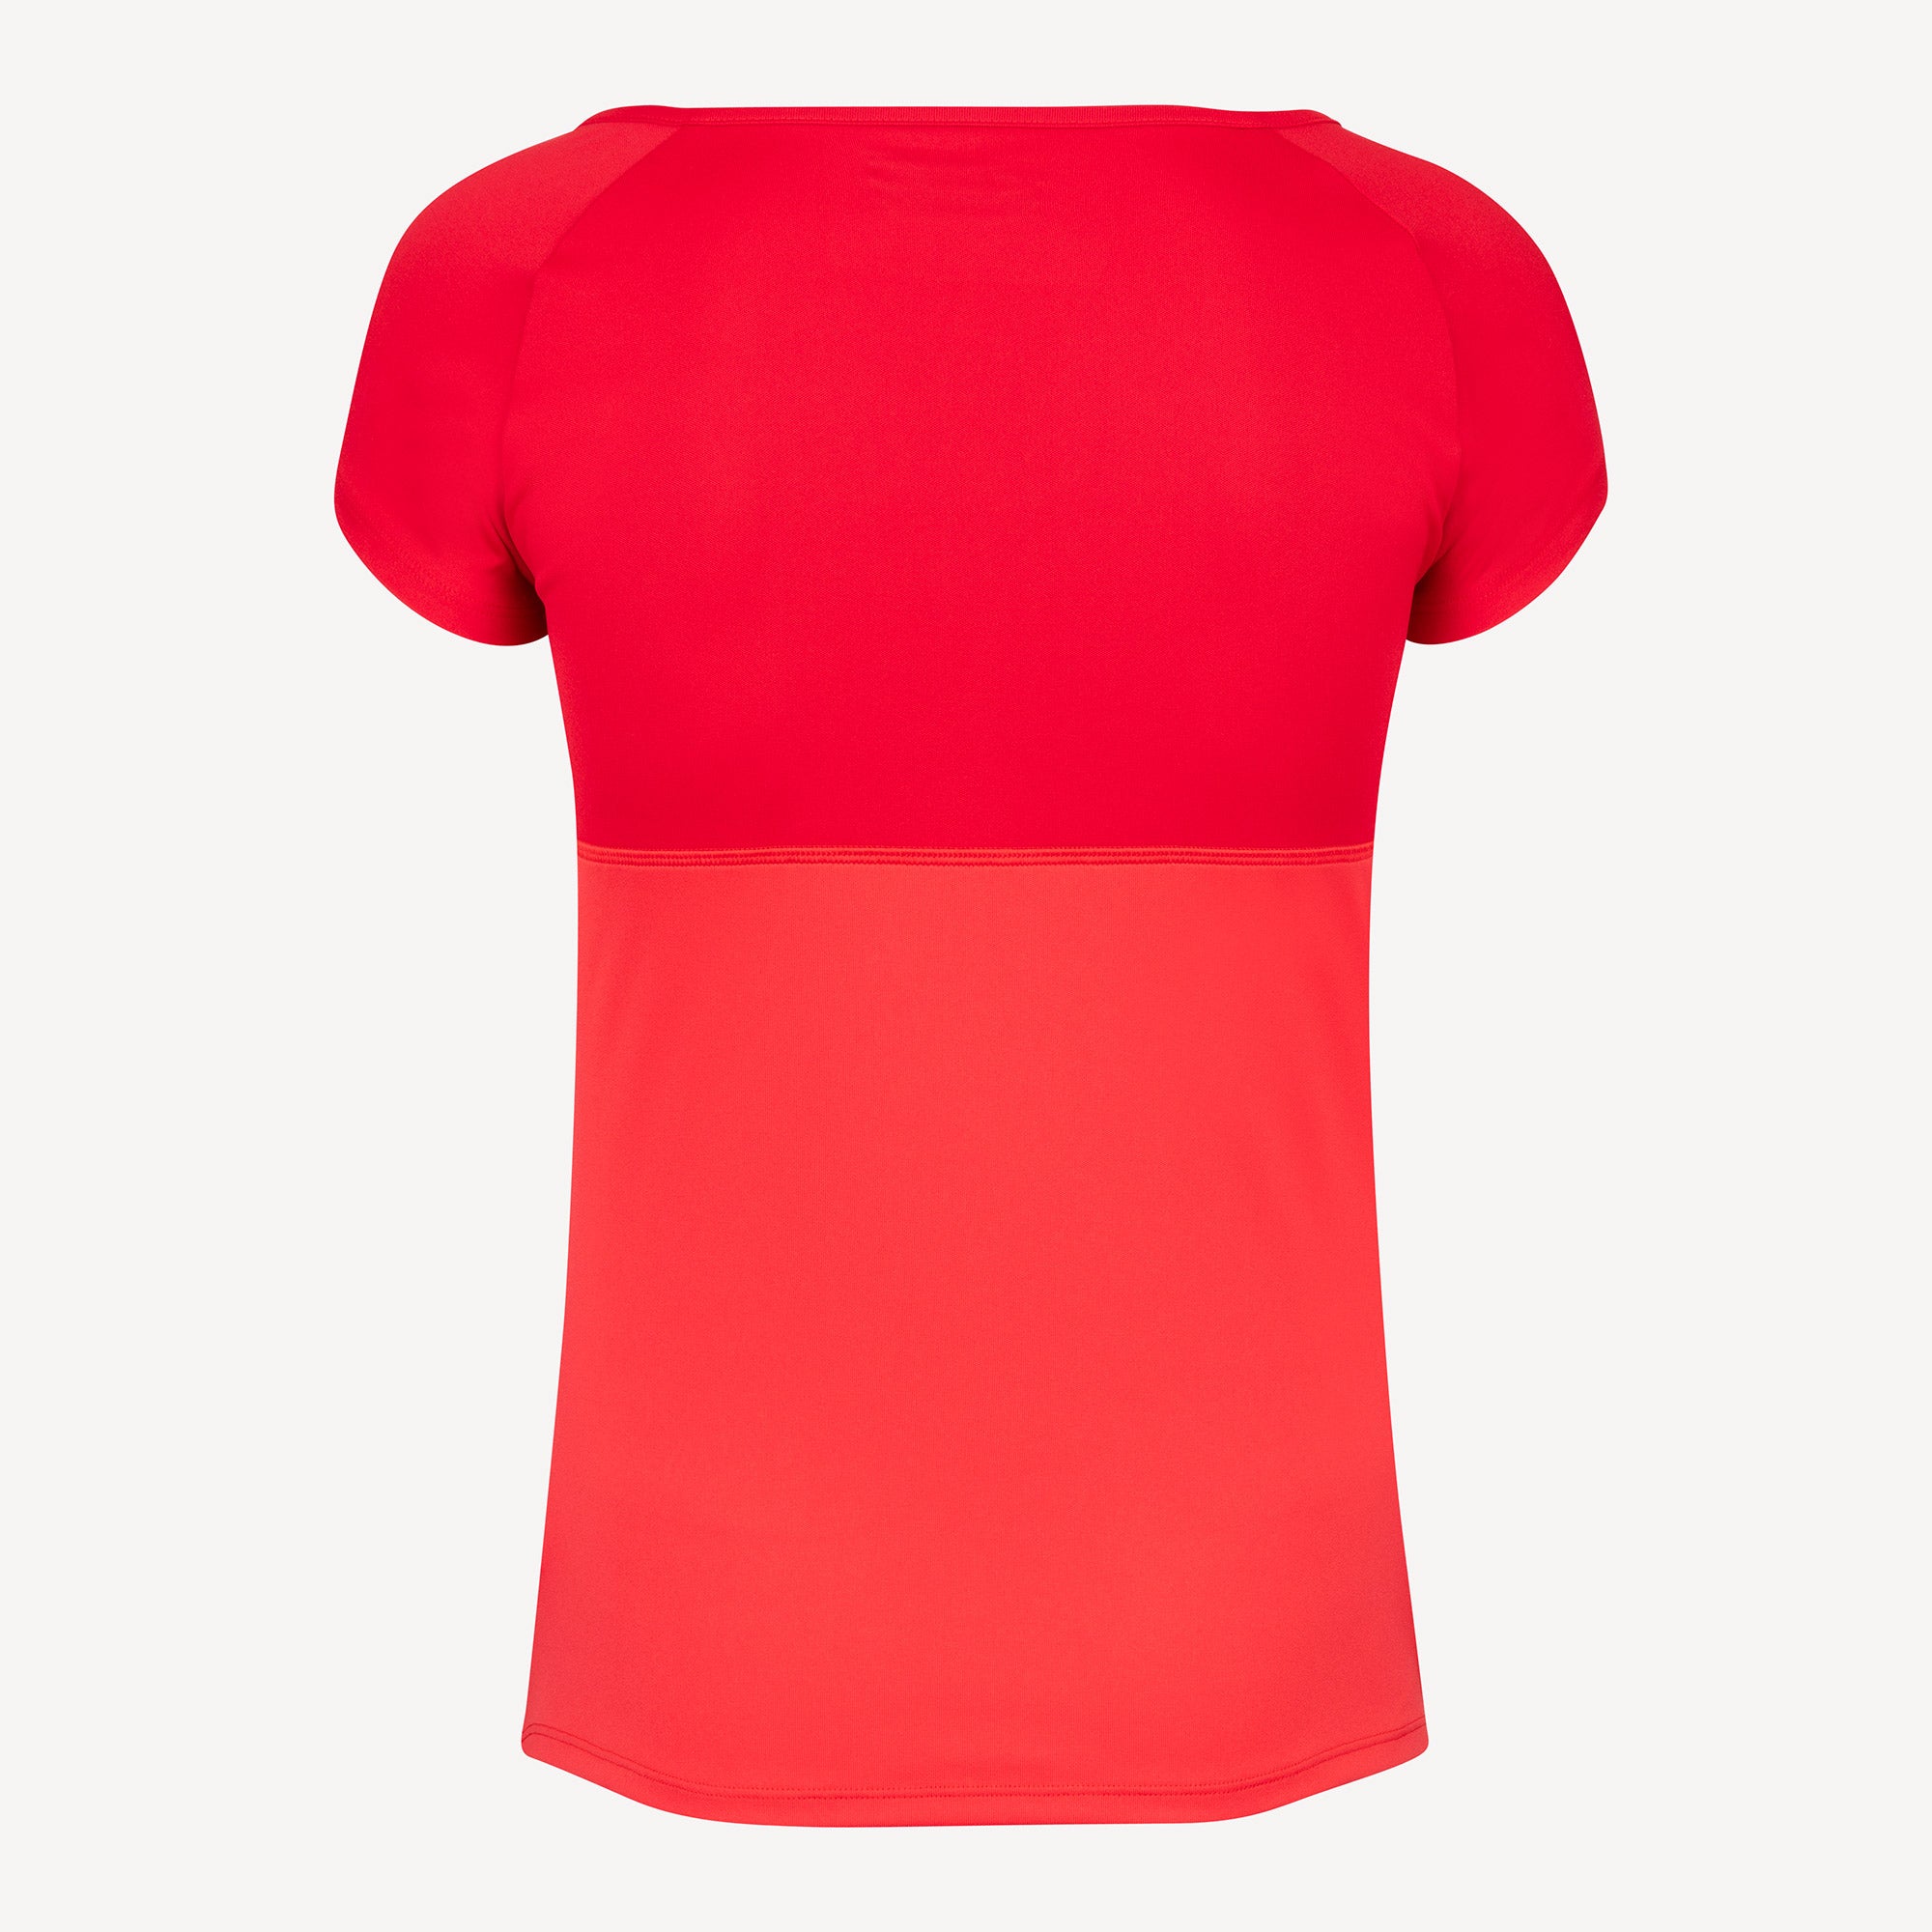 Babolat Play Club Women's Tennis Shirt Red (2)